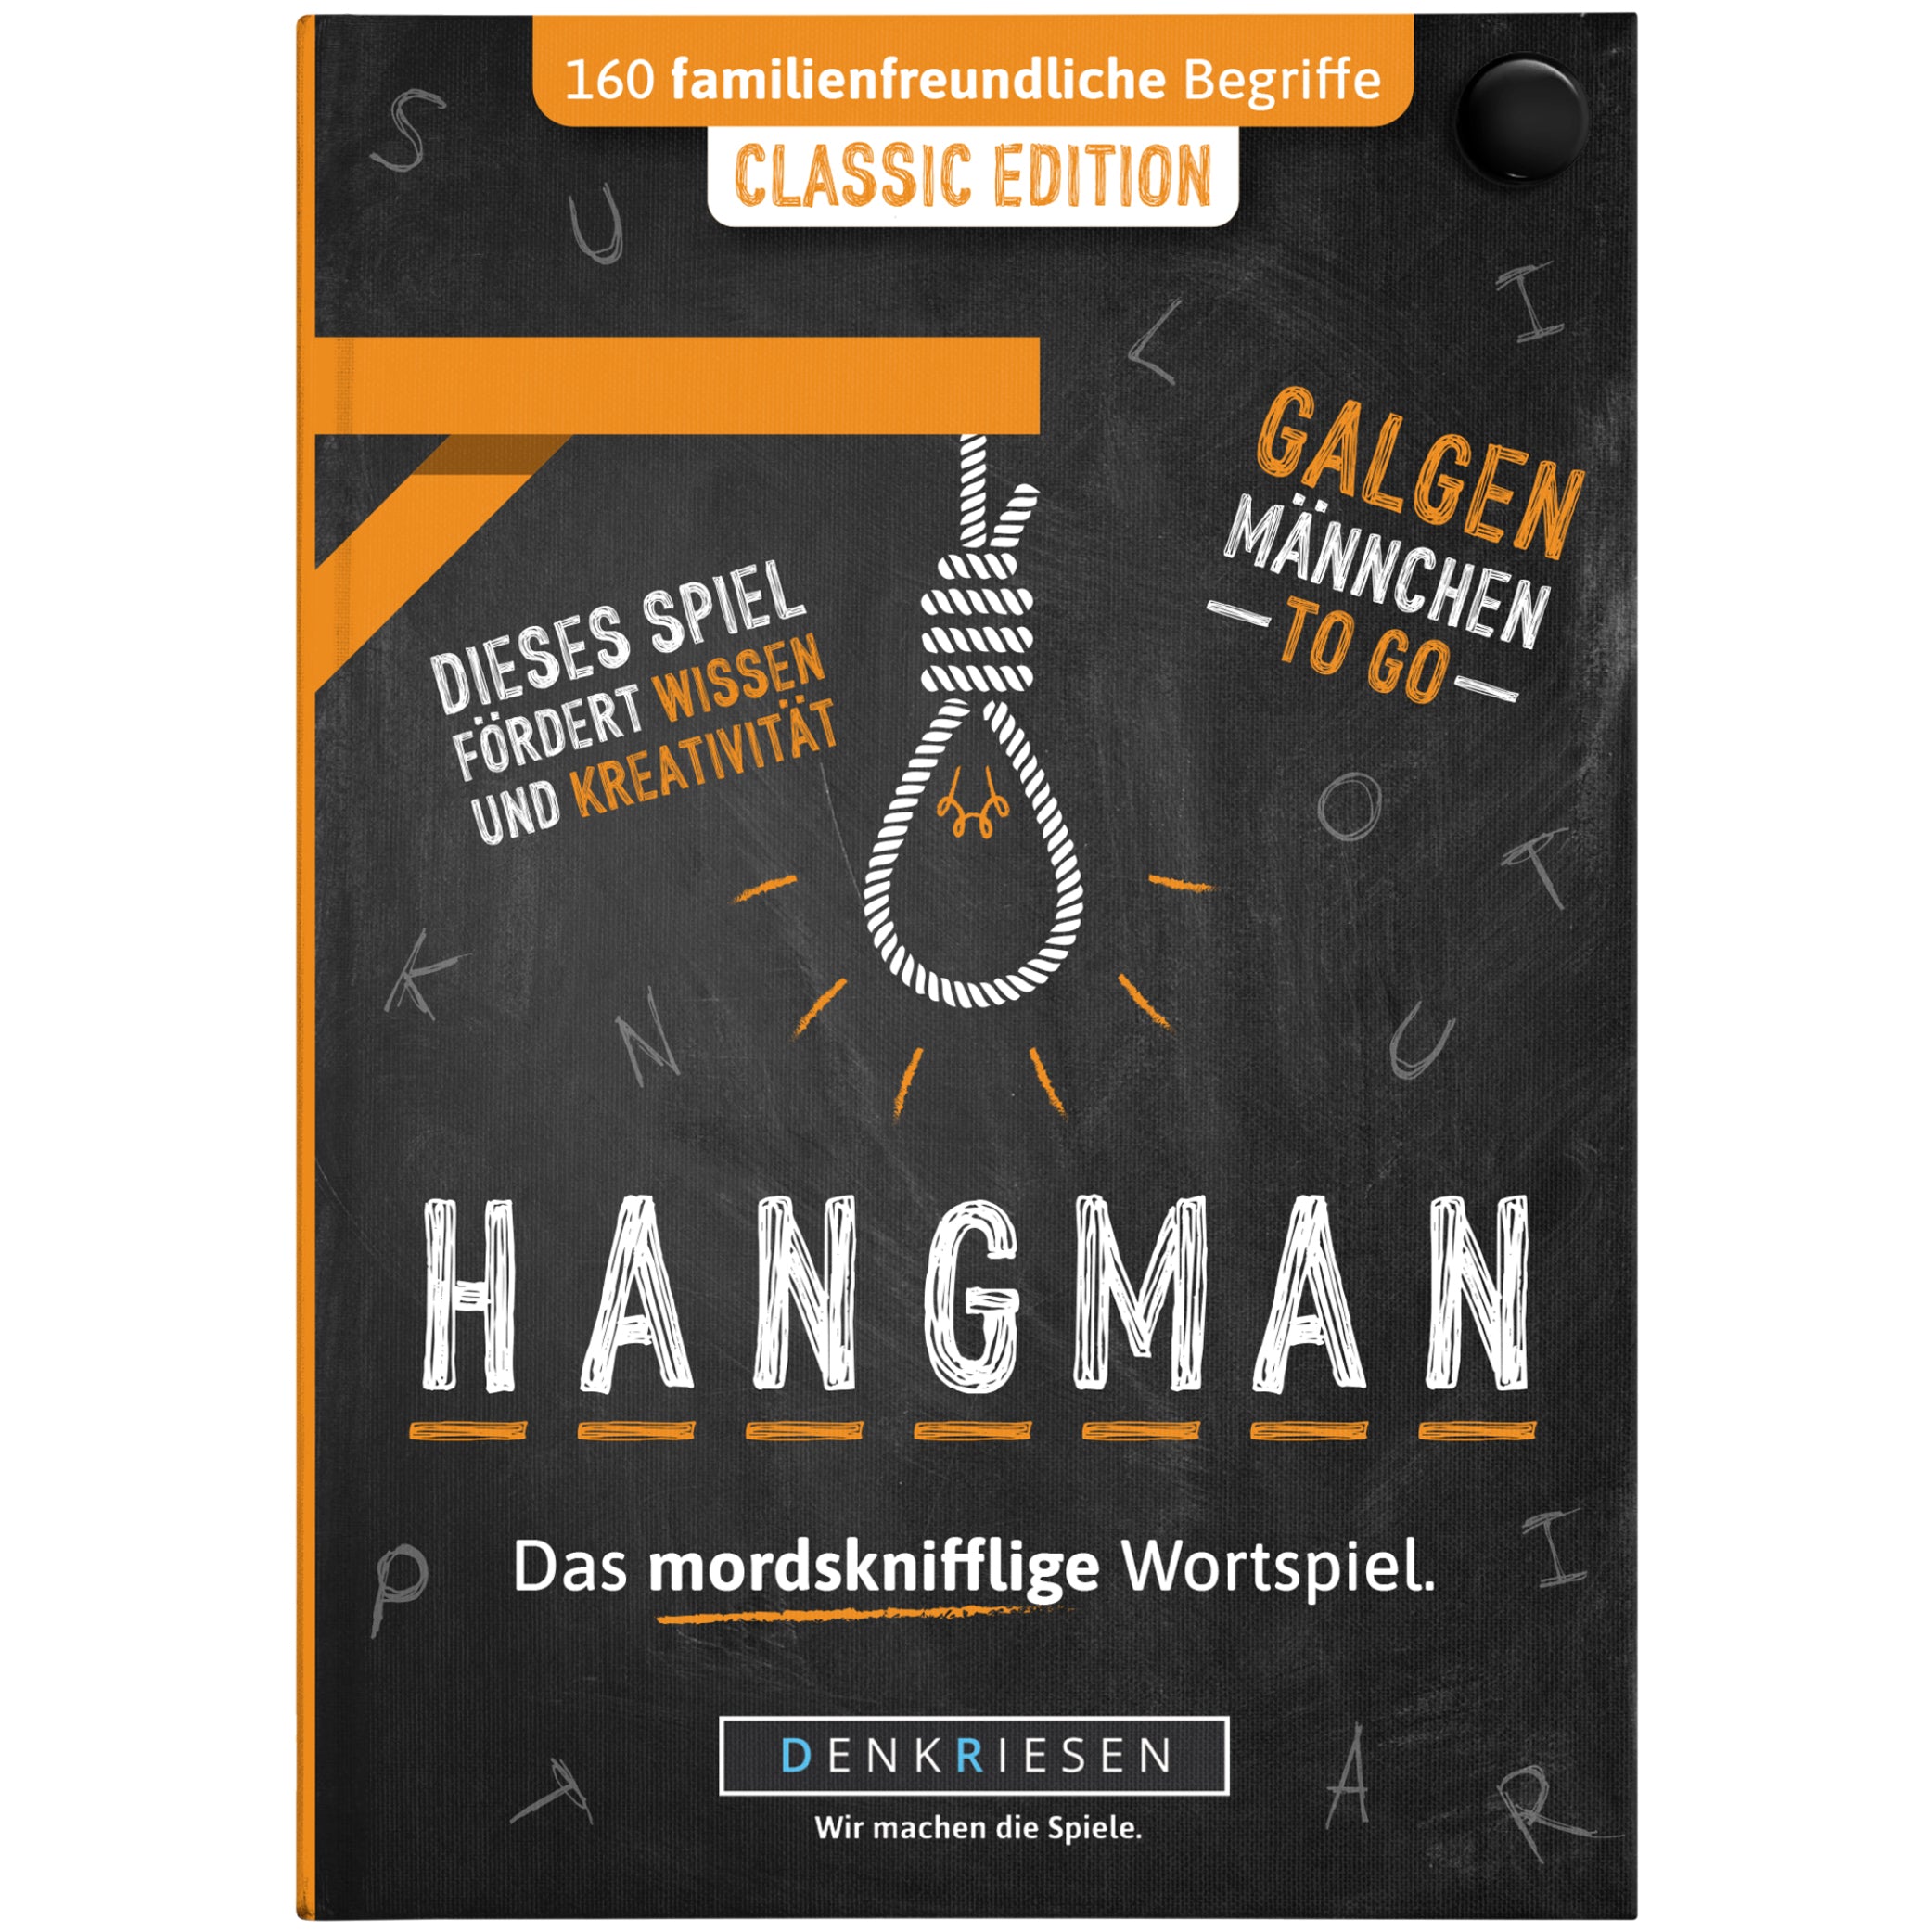 HANGMAN® | Classic Edition – "Das mordsknifflige Wortspiel."